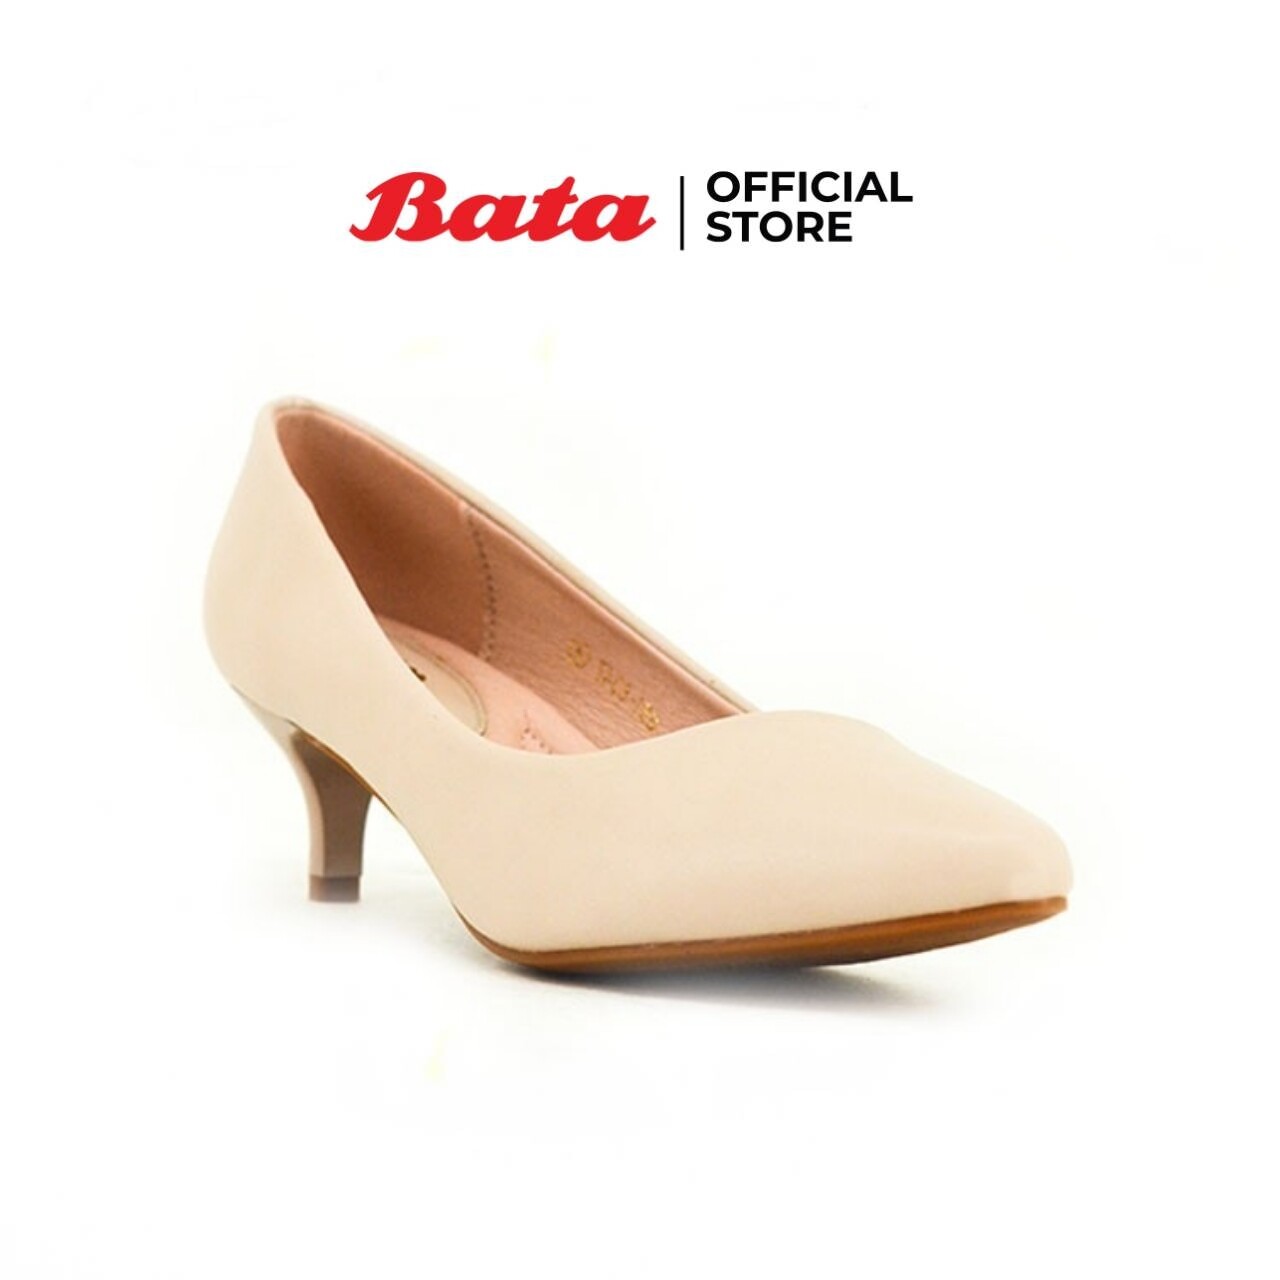 Bata LADIES HEELS รองเท้าส้นสูงสตรี PUMP CONTEMP สูง 1.5 นิ้ว สีชมพู รหัส 6518347 / สีดำ รหัส 6516347 Ladiesheel Fashion